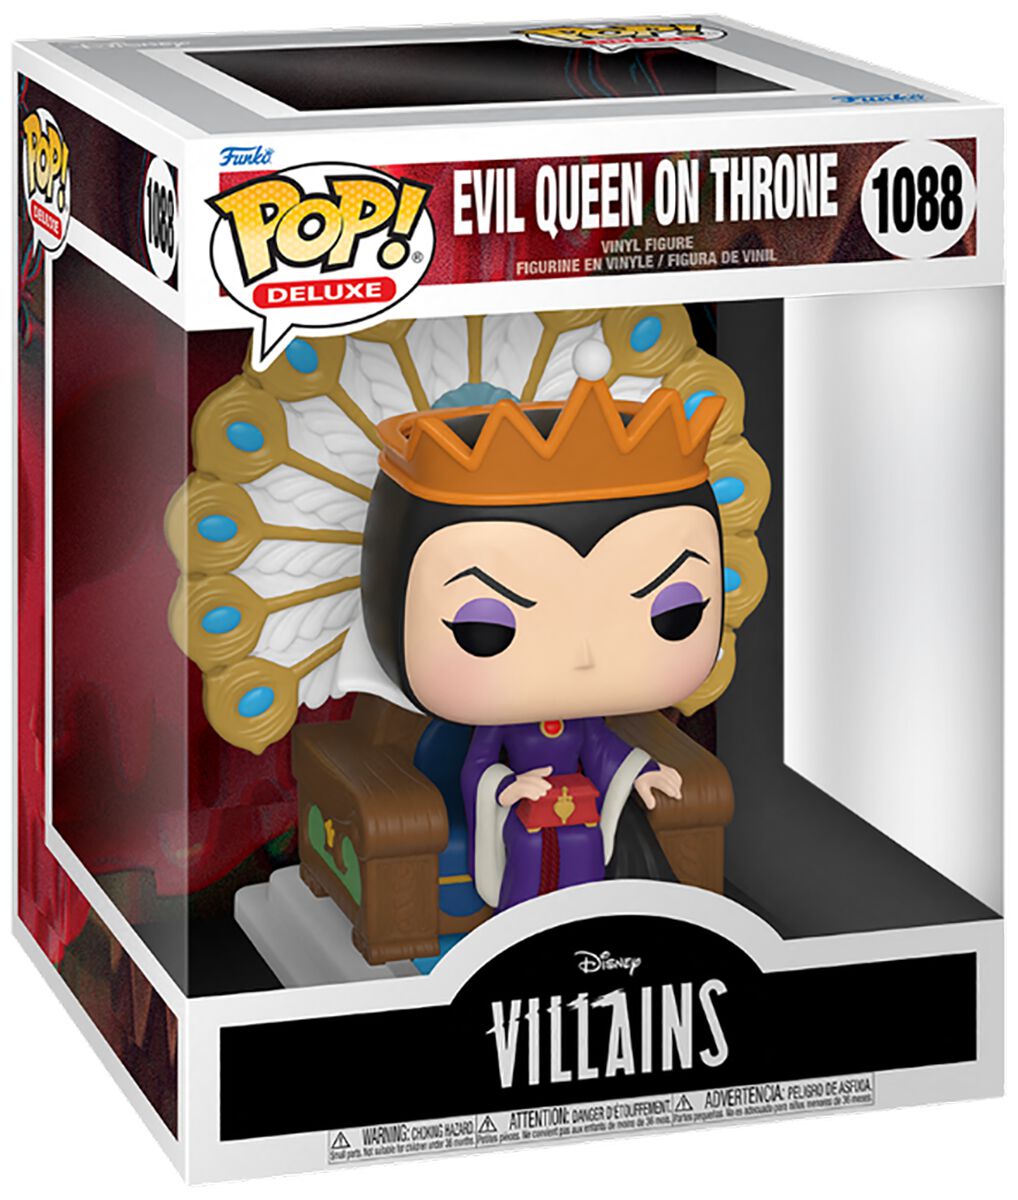 Disney Villains Evil Queen on throne (Pop! Deluxe) vinyl figurine no. 1088 Funko Pop! multicolor